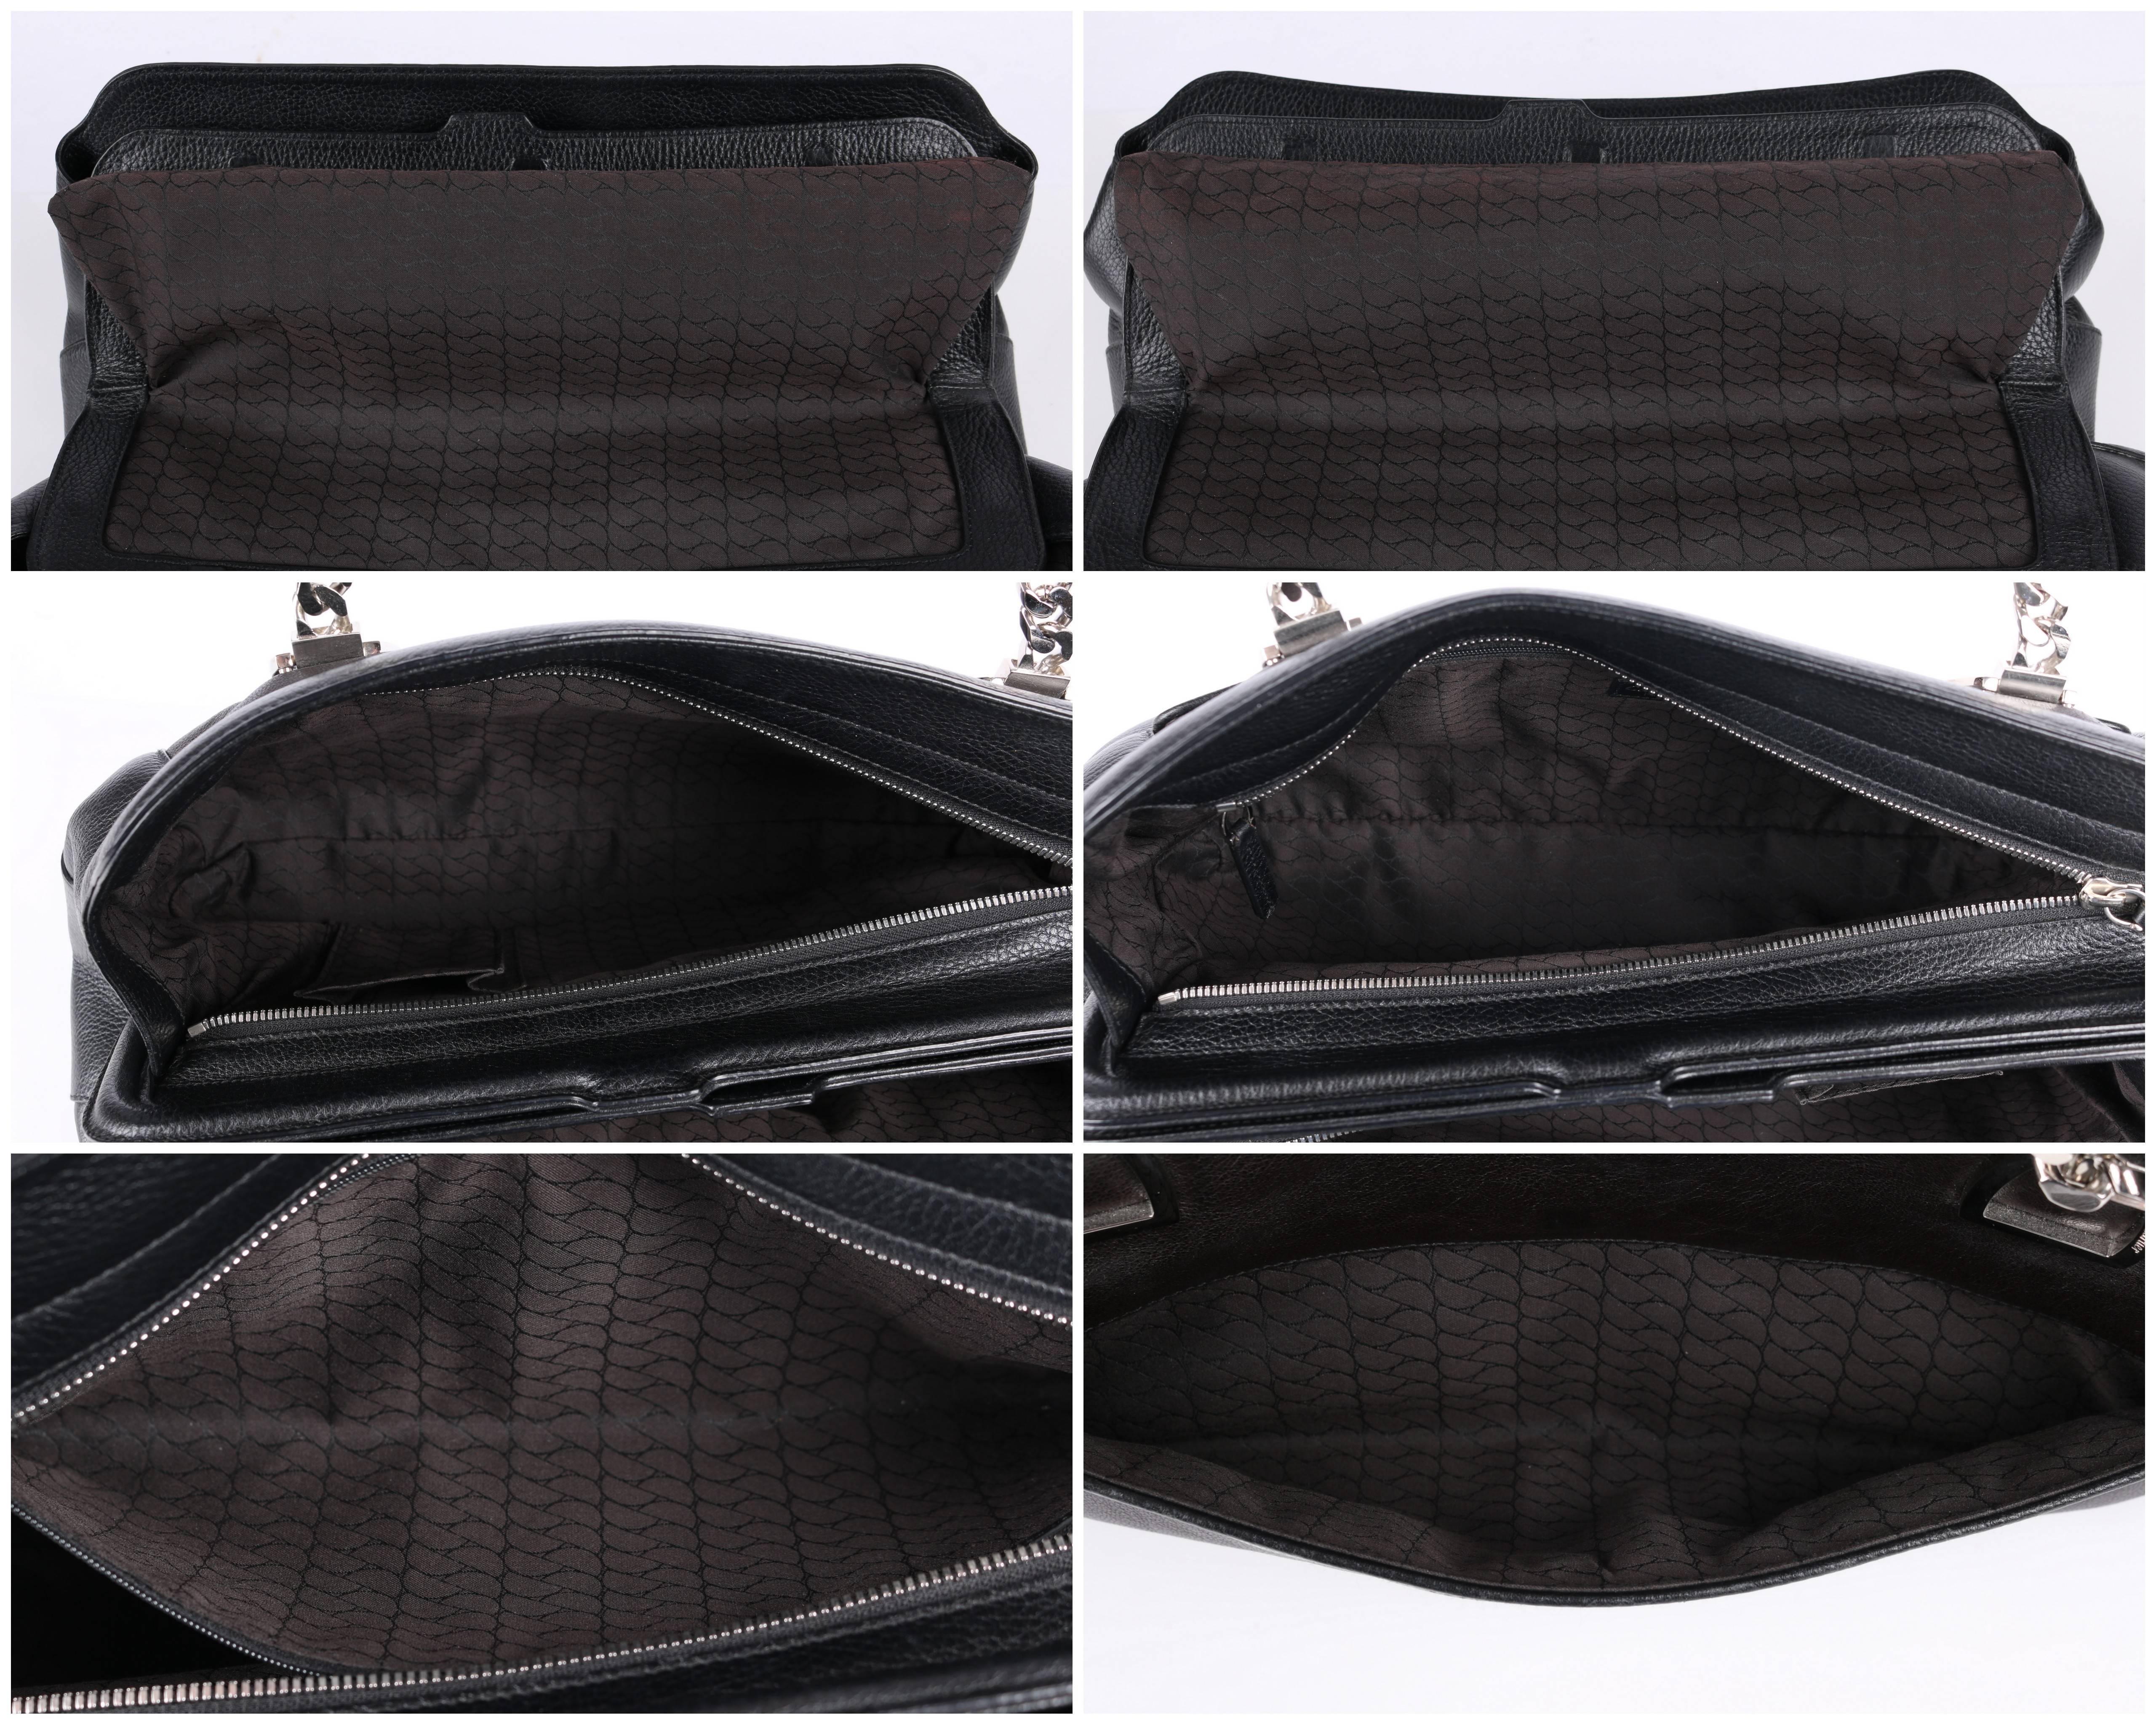 CARTIER Black Textured Leather La Dona Chain Link Satchel Bag Handbag Purse 3